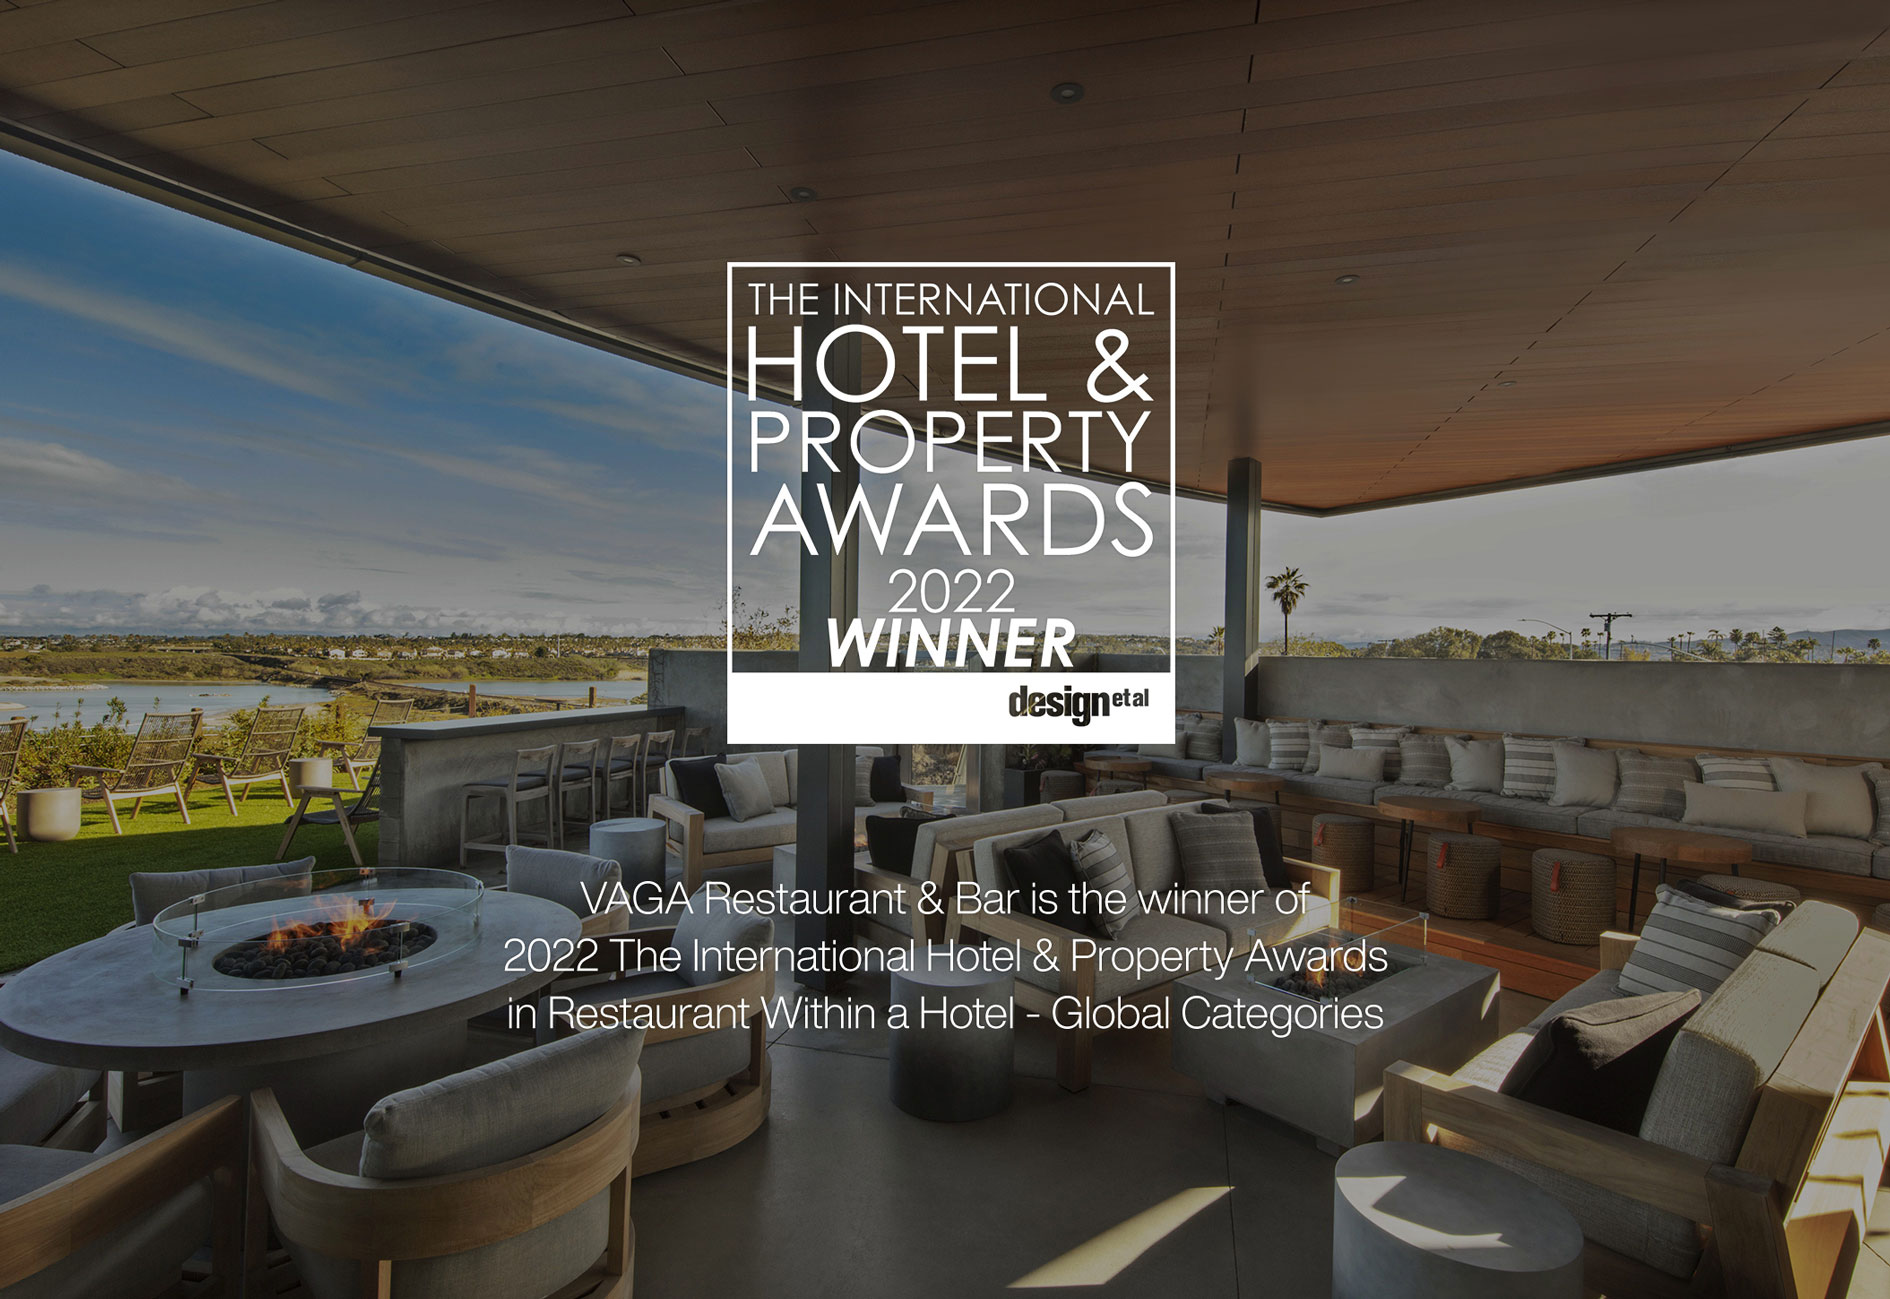 The International Hotel & Property Awards – VAGA designed by Mark Zeff